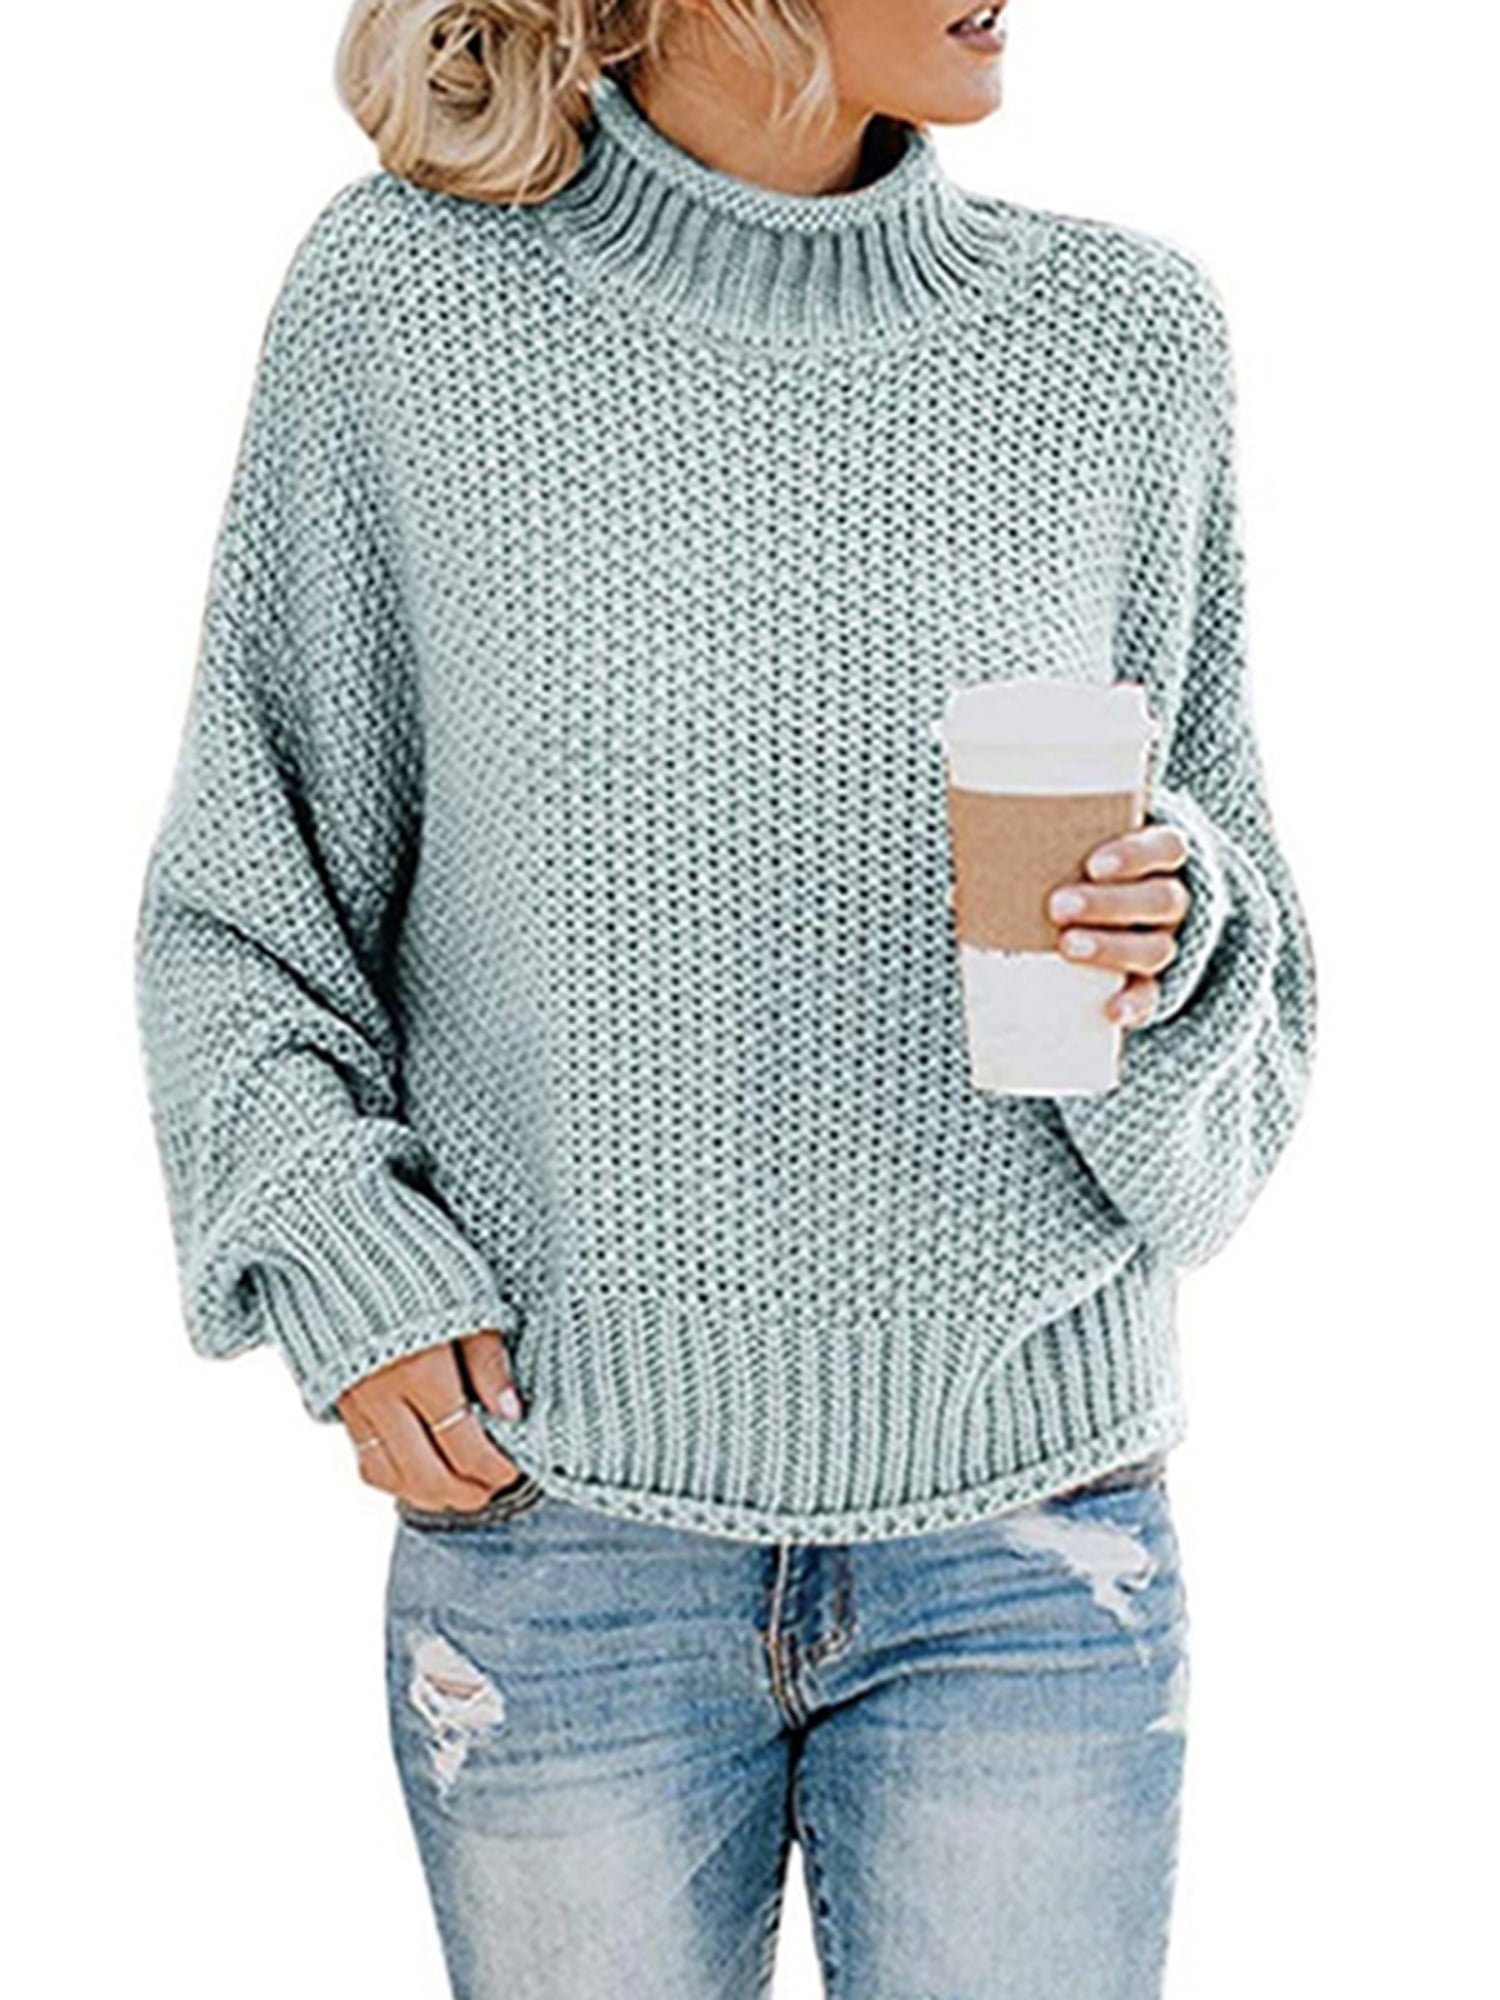 Women/'s Knit Lightweight Turtleneck Classic Pullover Long Sleeve Sweater Tops